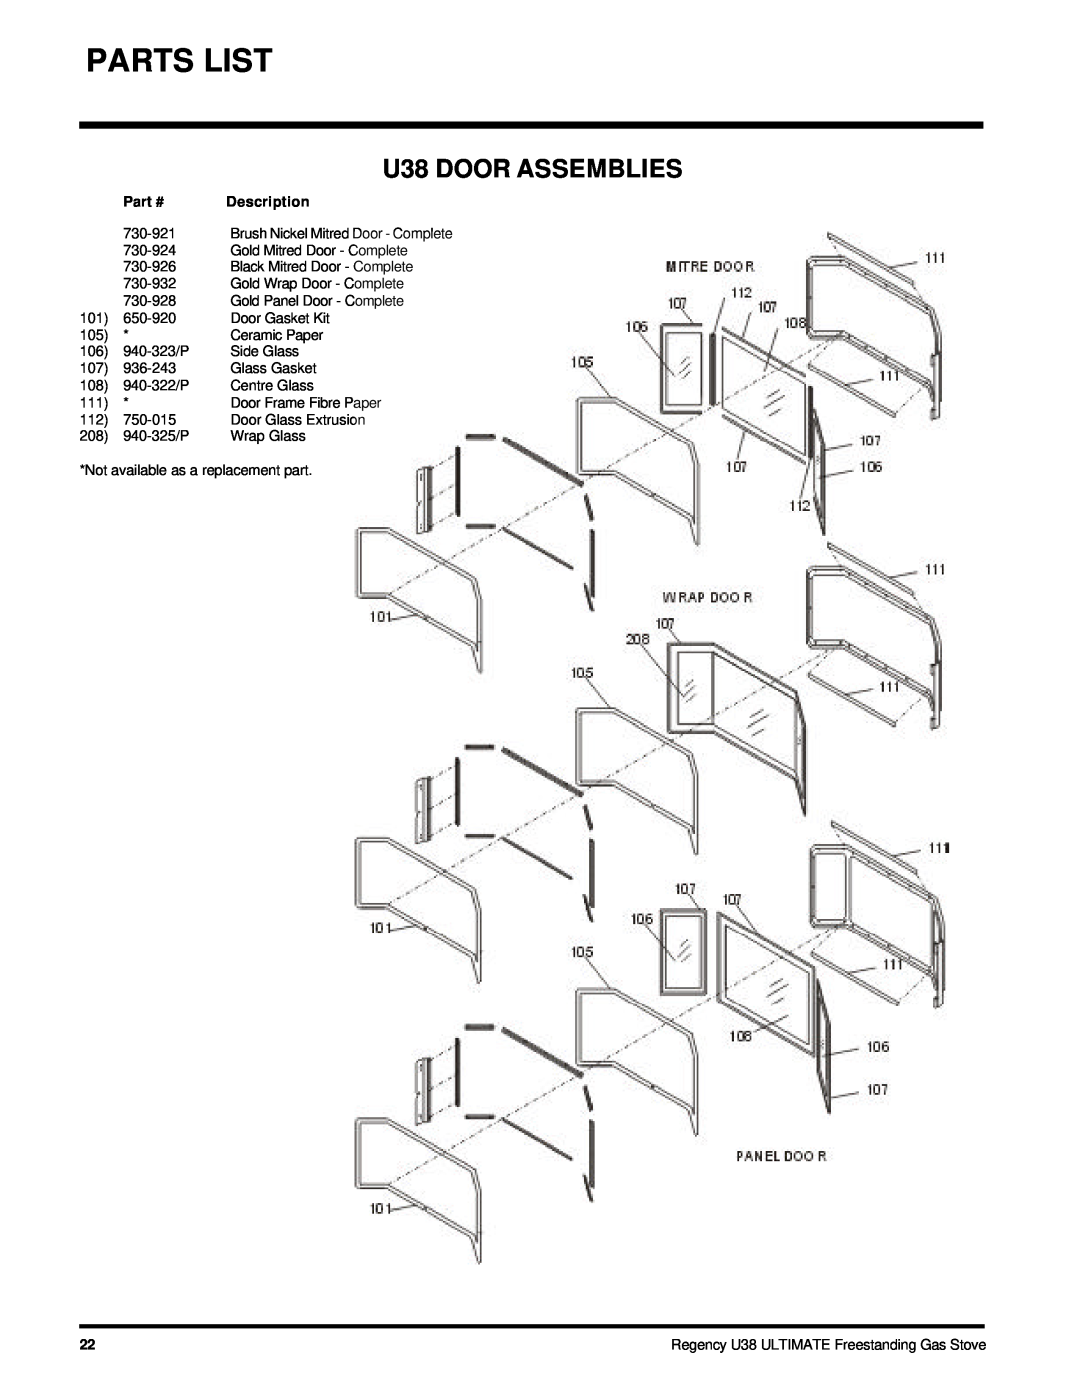 Regency U38-LP, U38-NG Parts List, U38 DOOR ASSEMBLIES, Description, Regency U38 ULTIMATE Freestanding Gas Stove 